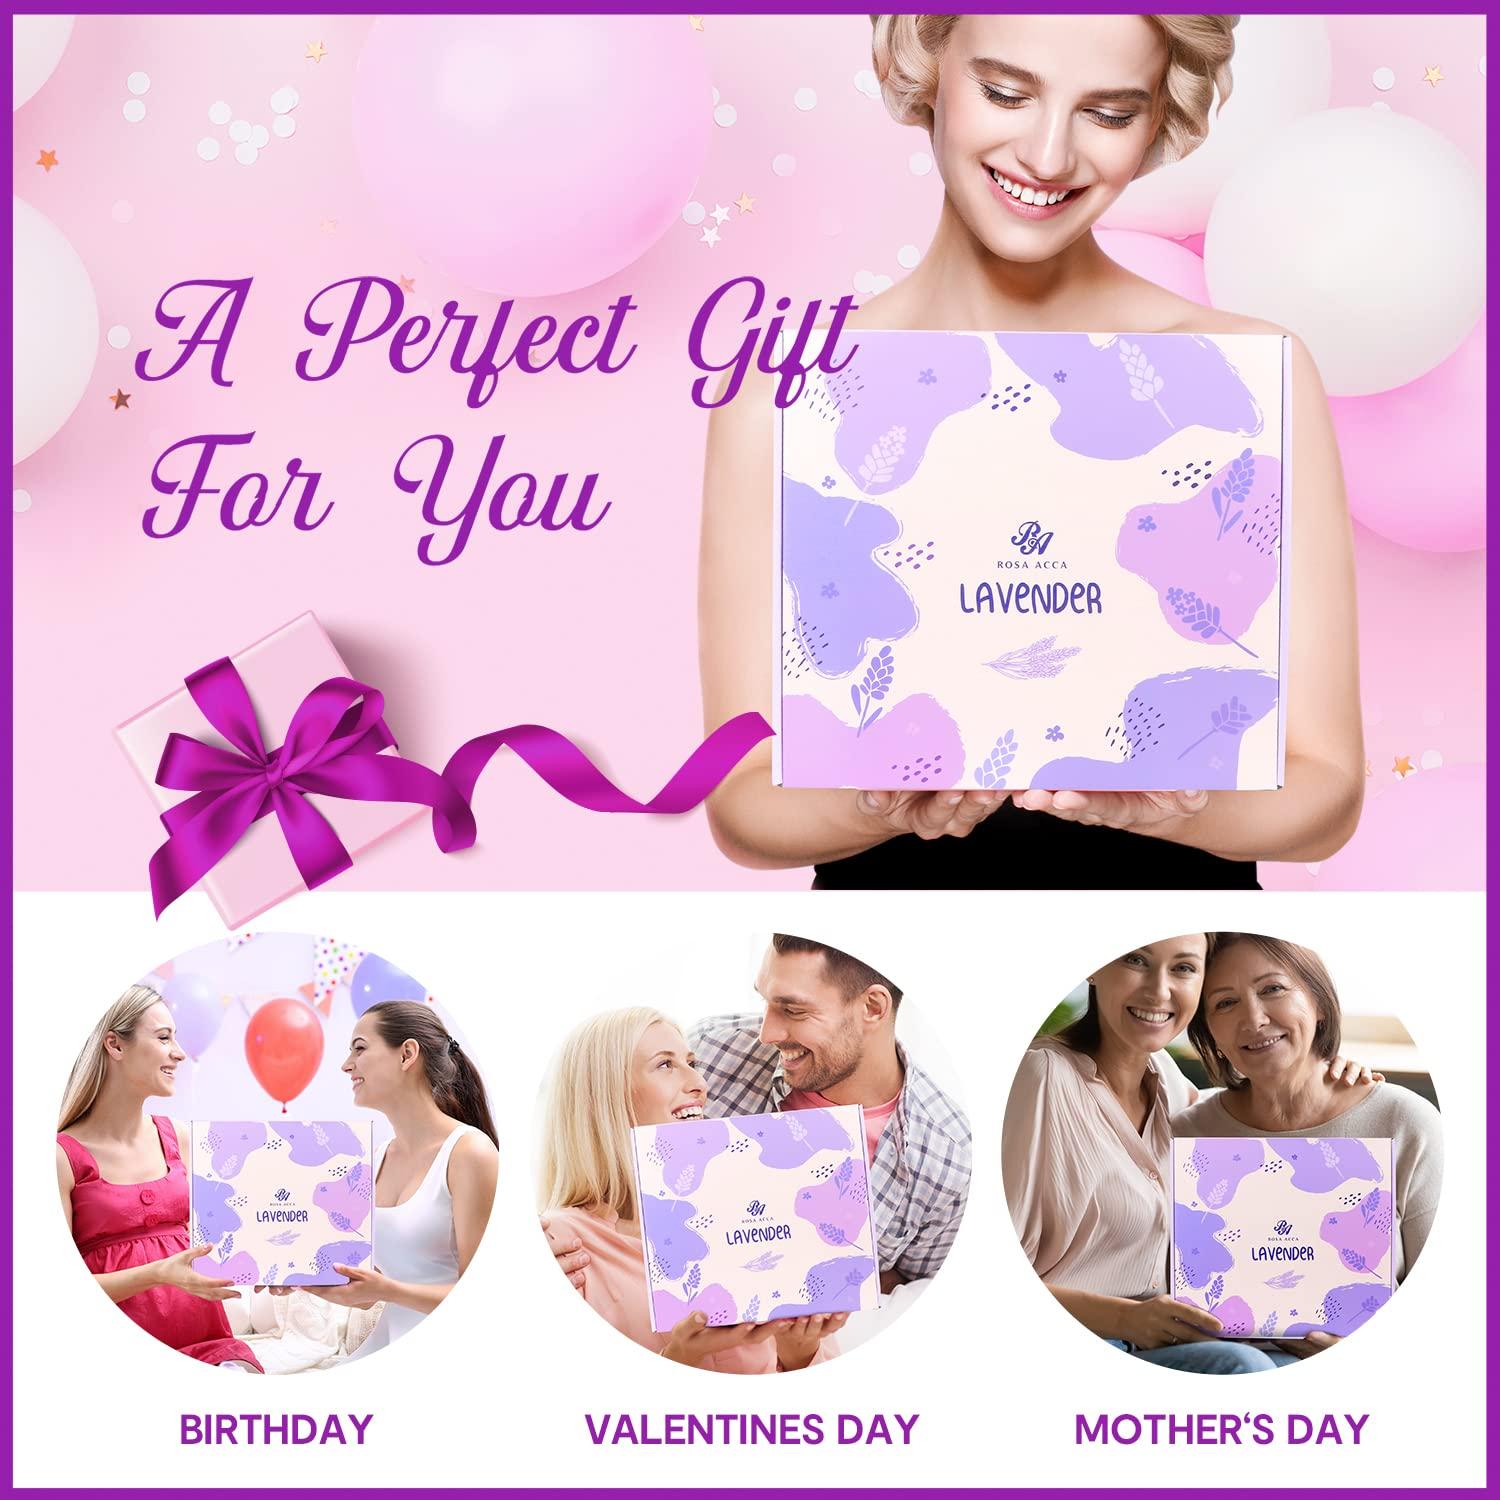 Pampering Gift Set - Mothers Day Gift, Gift for Mom, Gift for Her, Gir -  Elegant Rose Boutique